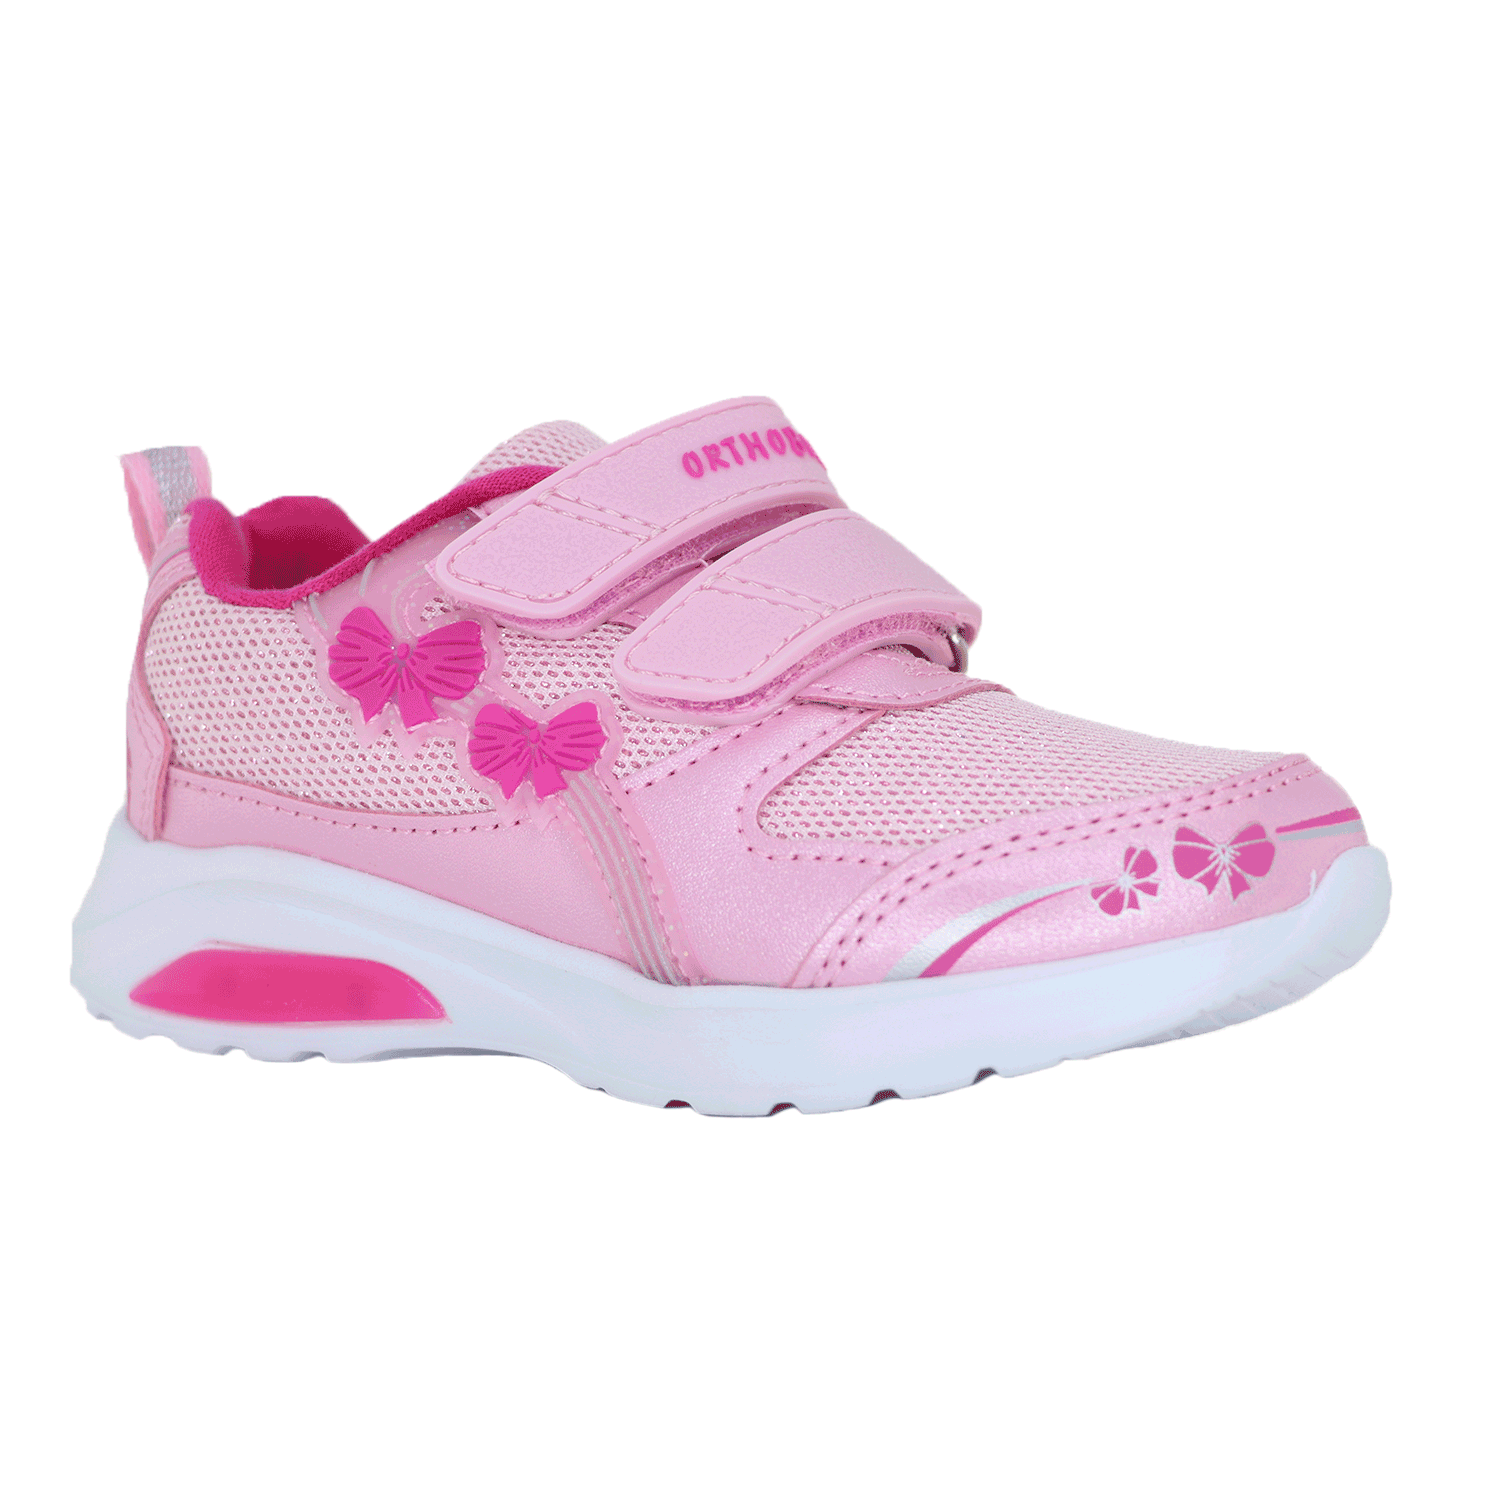 Детские кроссовки ORTHOBOOM 30225-07 нежно-розовый с фуксией